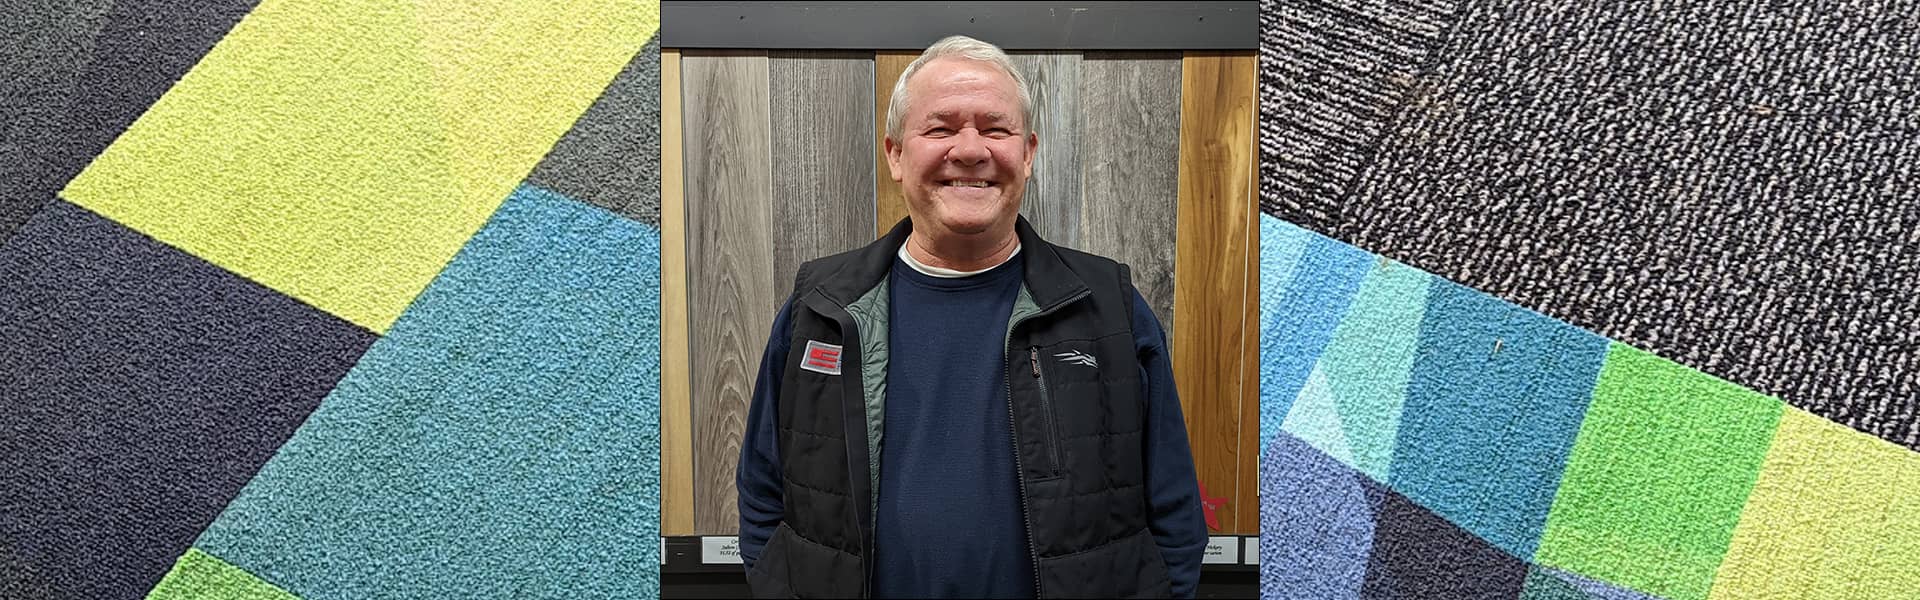 Matt McIntosh, commercial sales representative at Bounds Flooring, smiling in front of flooring samples.